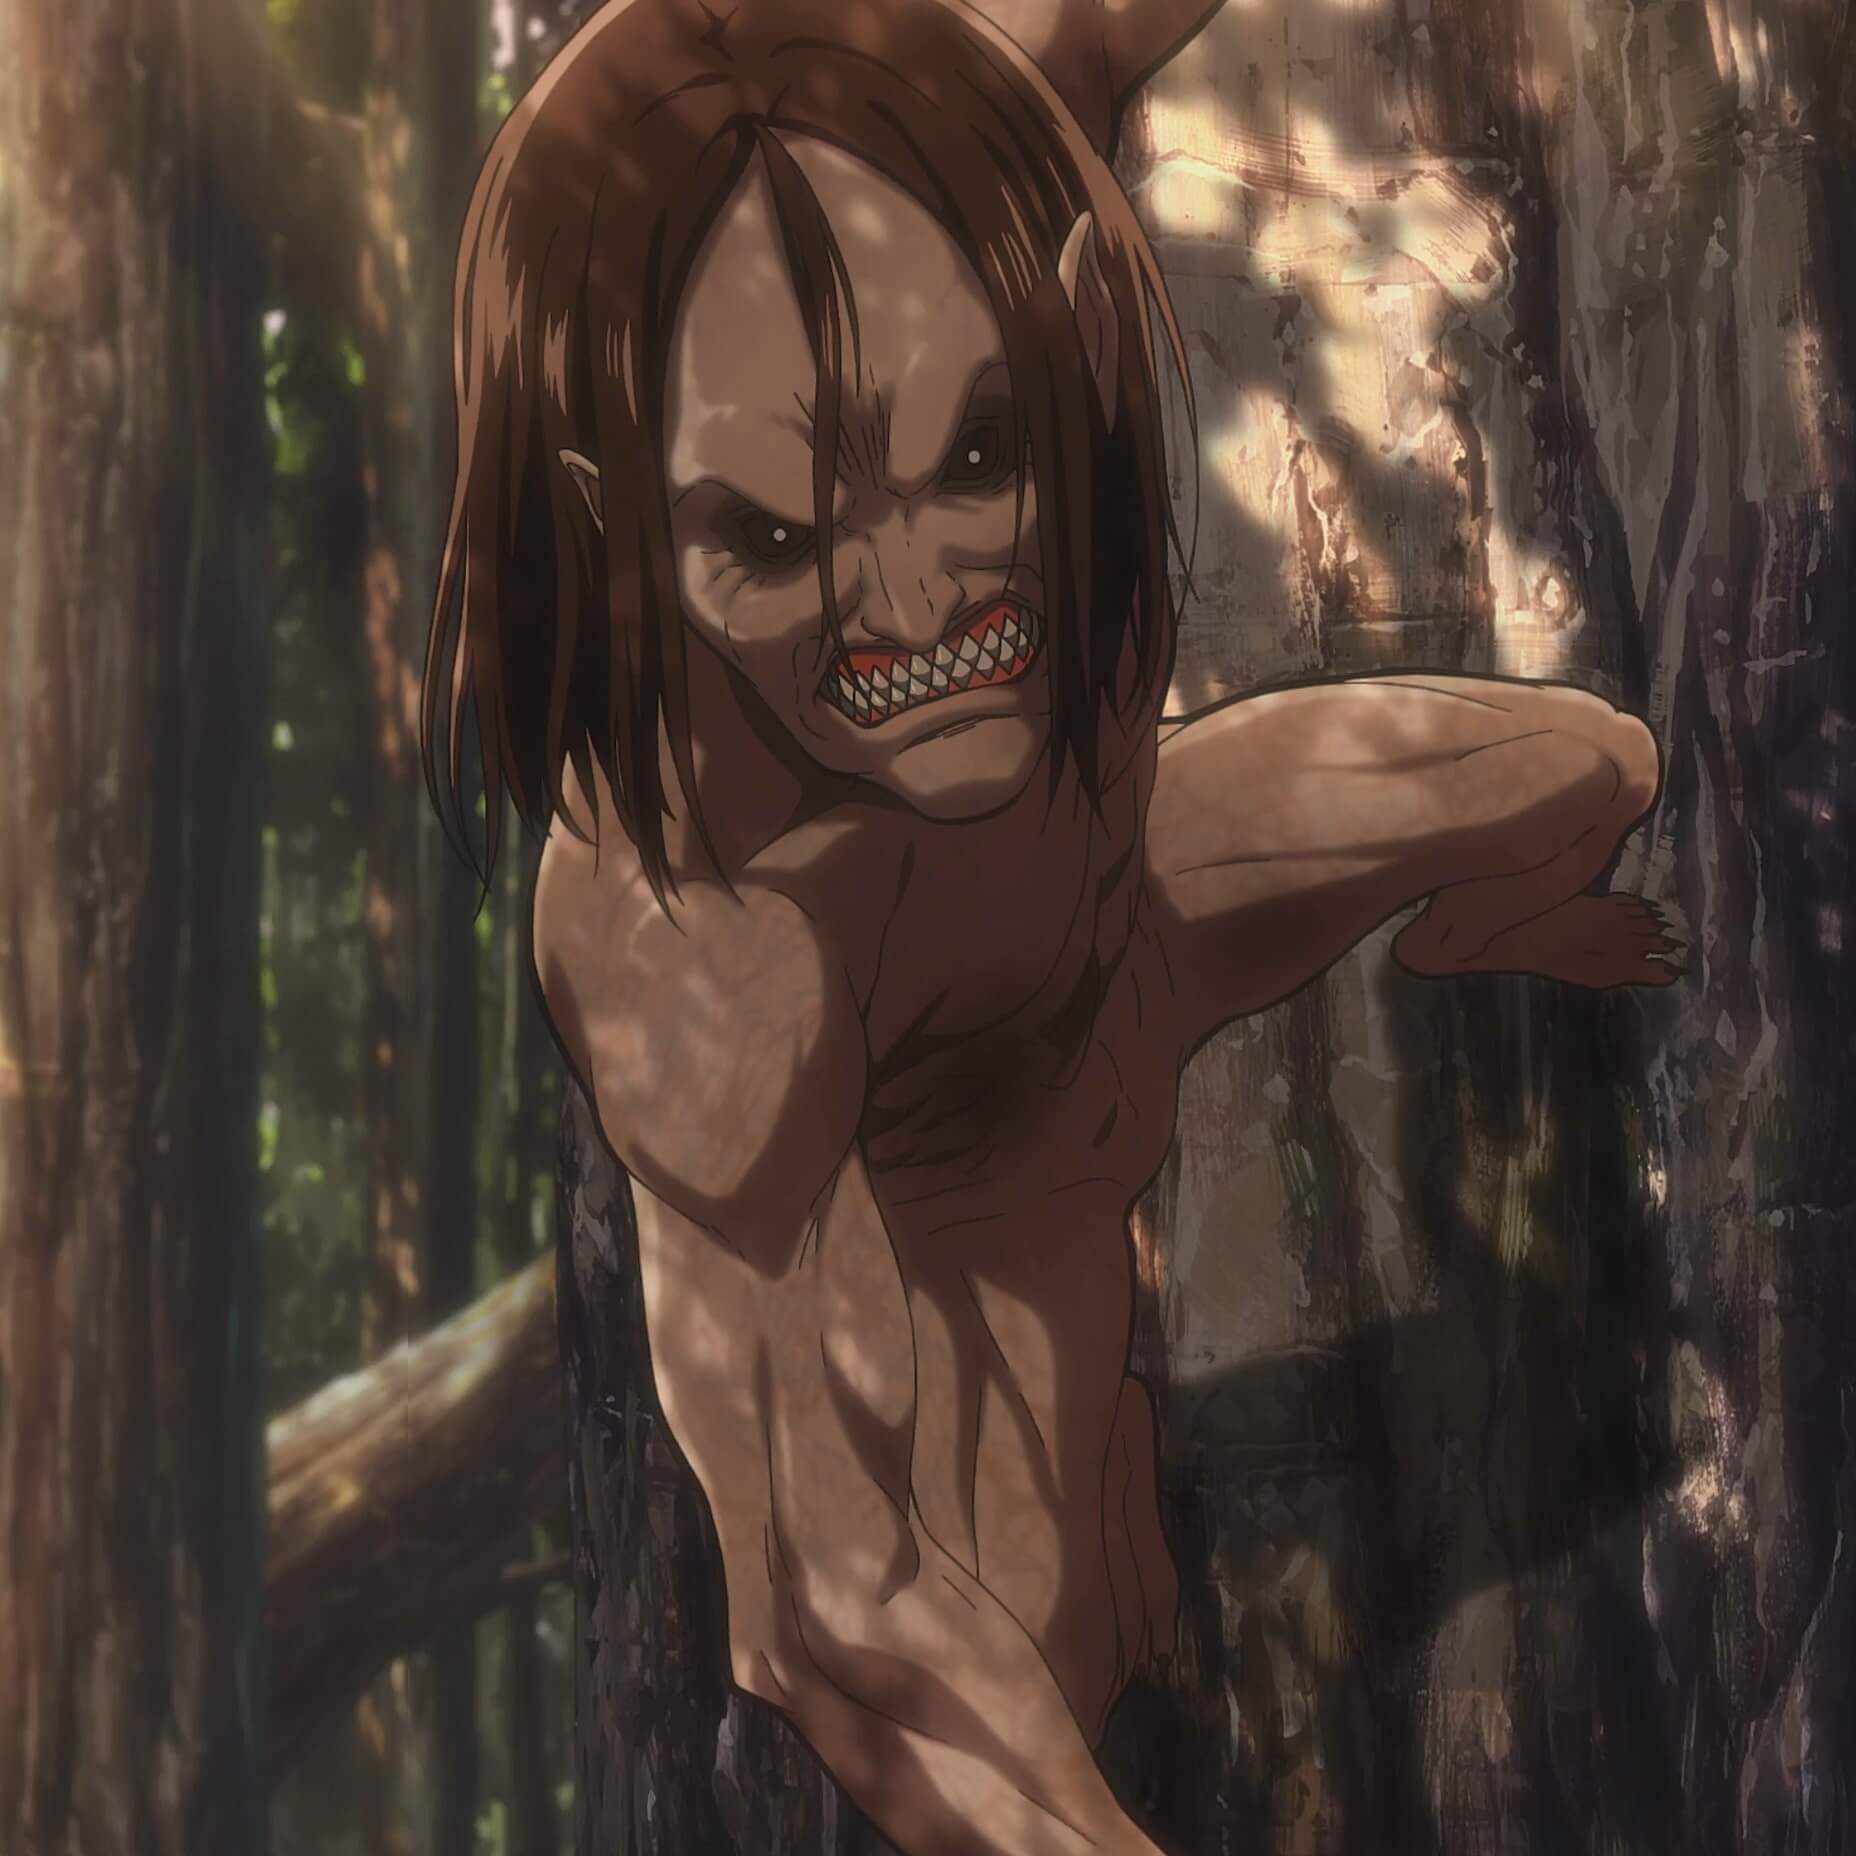 anime halloween costume - Ymir titan